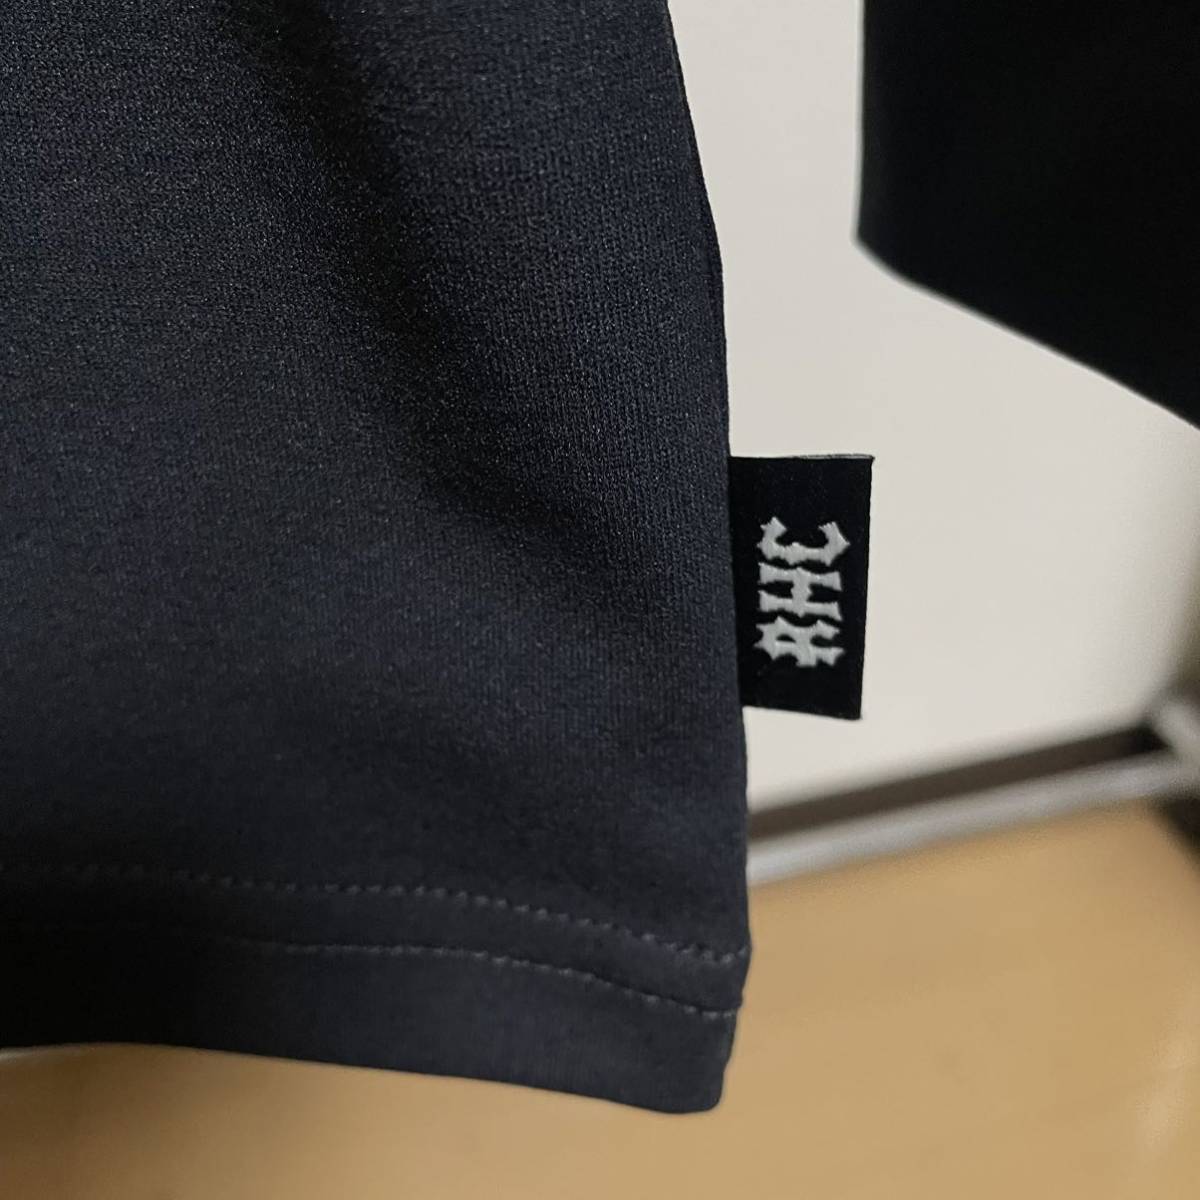 RHC × BILLABONG Recycled Long Sleeve Tee【M】リサイクルロングスリーブティー 長袖 Tシャツ ビラボン  ロンハーマン 別注 ロンT【新品】